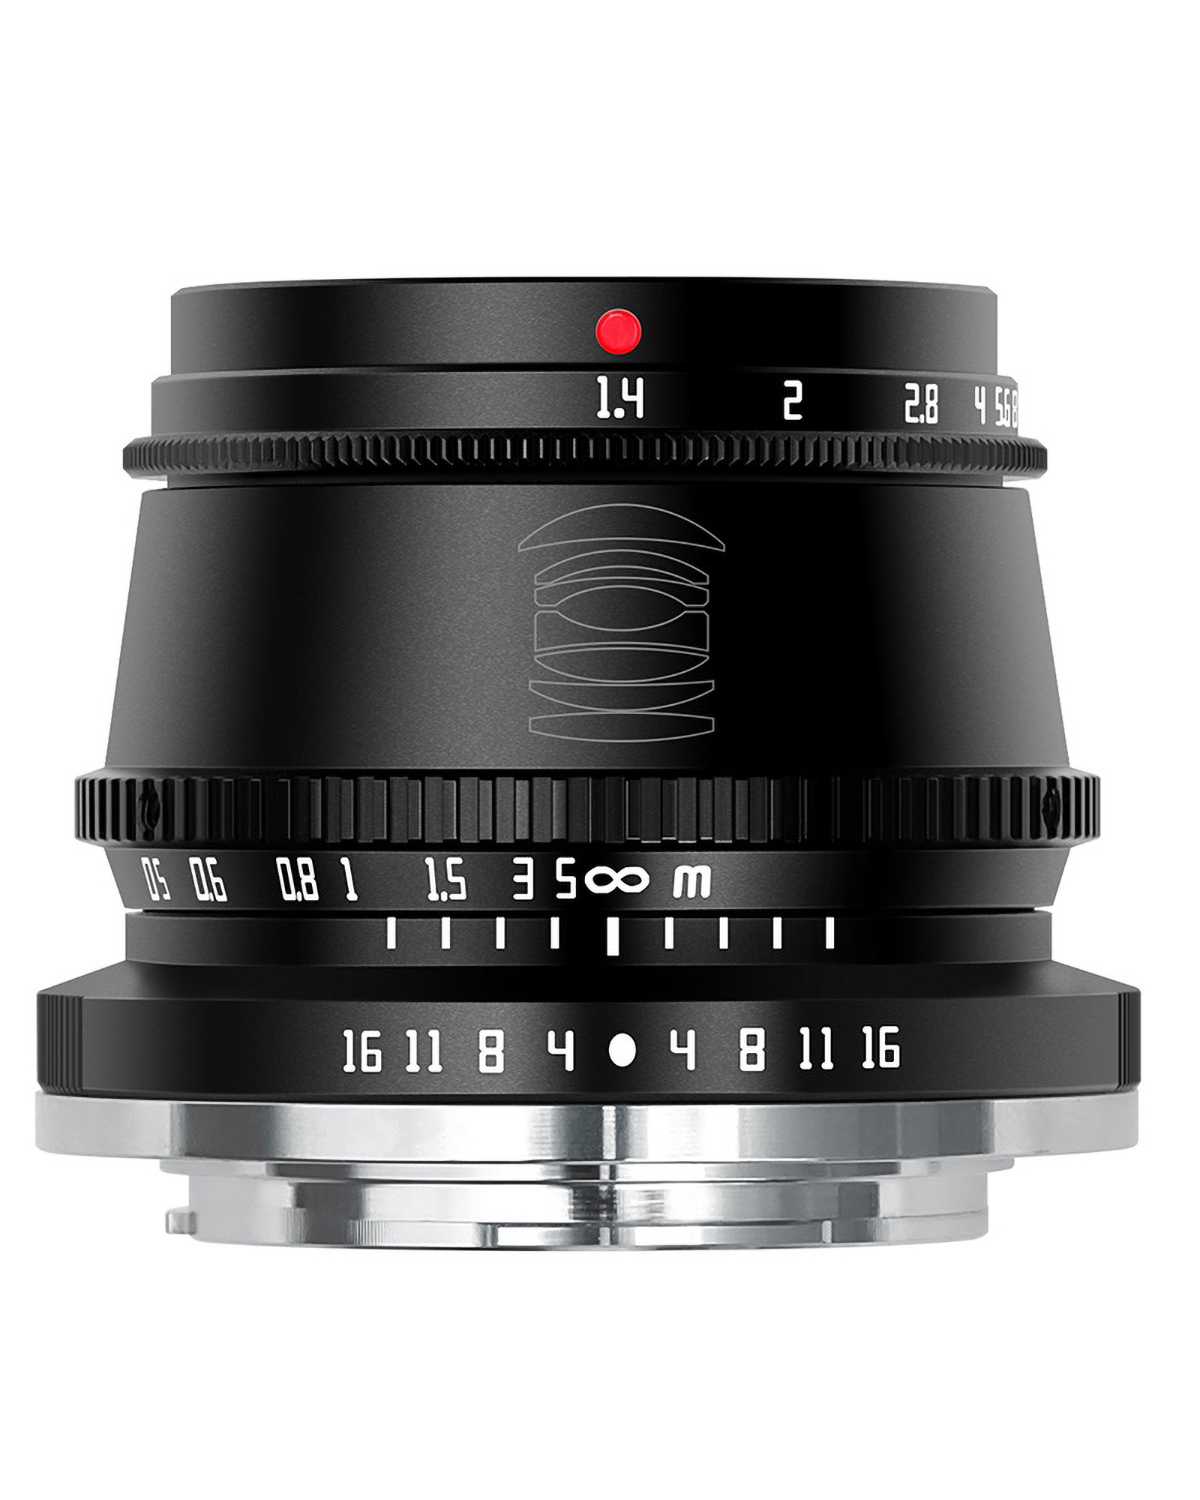 TTARTISAN 35mm f1.4 für 35 Fuji für (Objektiv XF-Mount, - schwarz) mm 35 Fuji X 1.4 mm